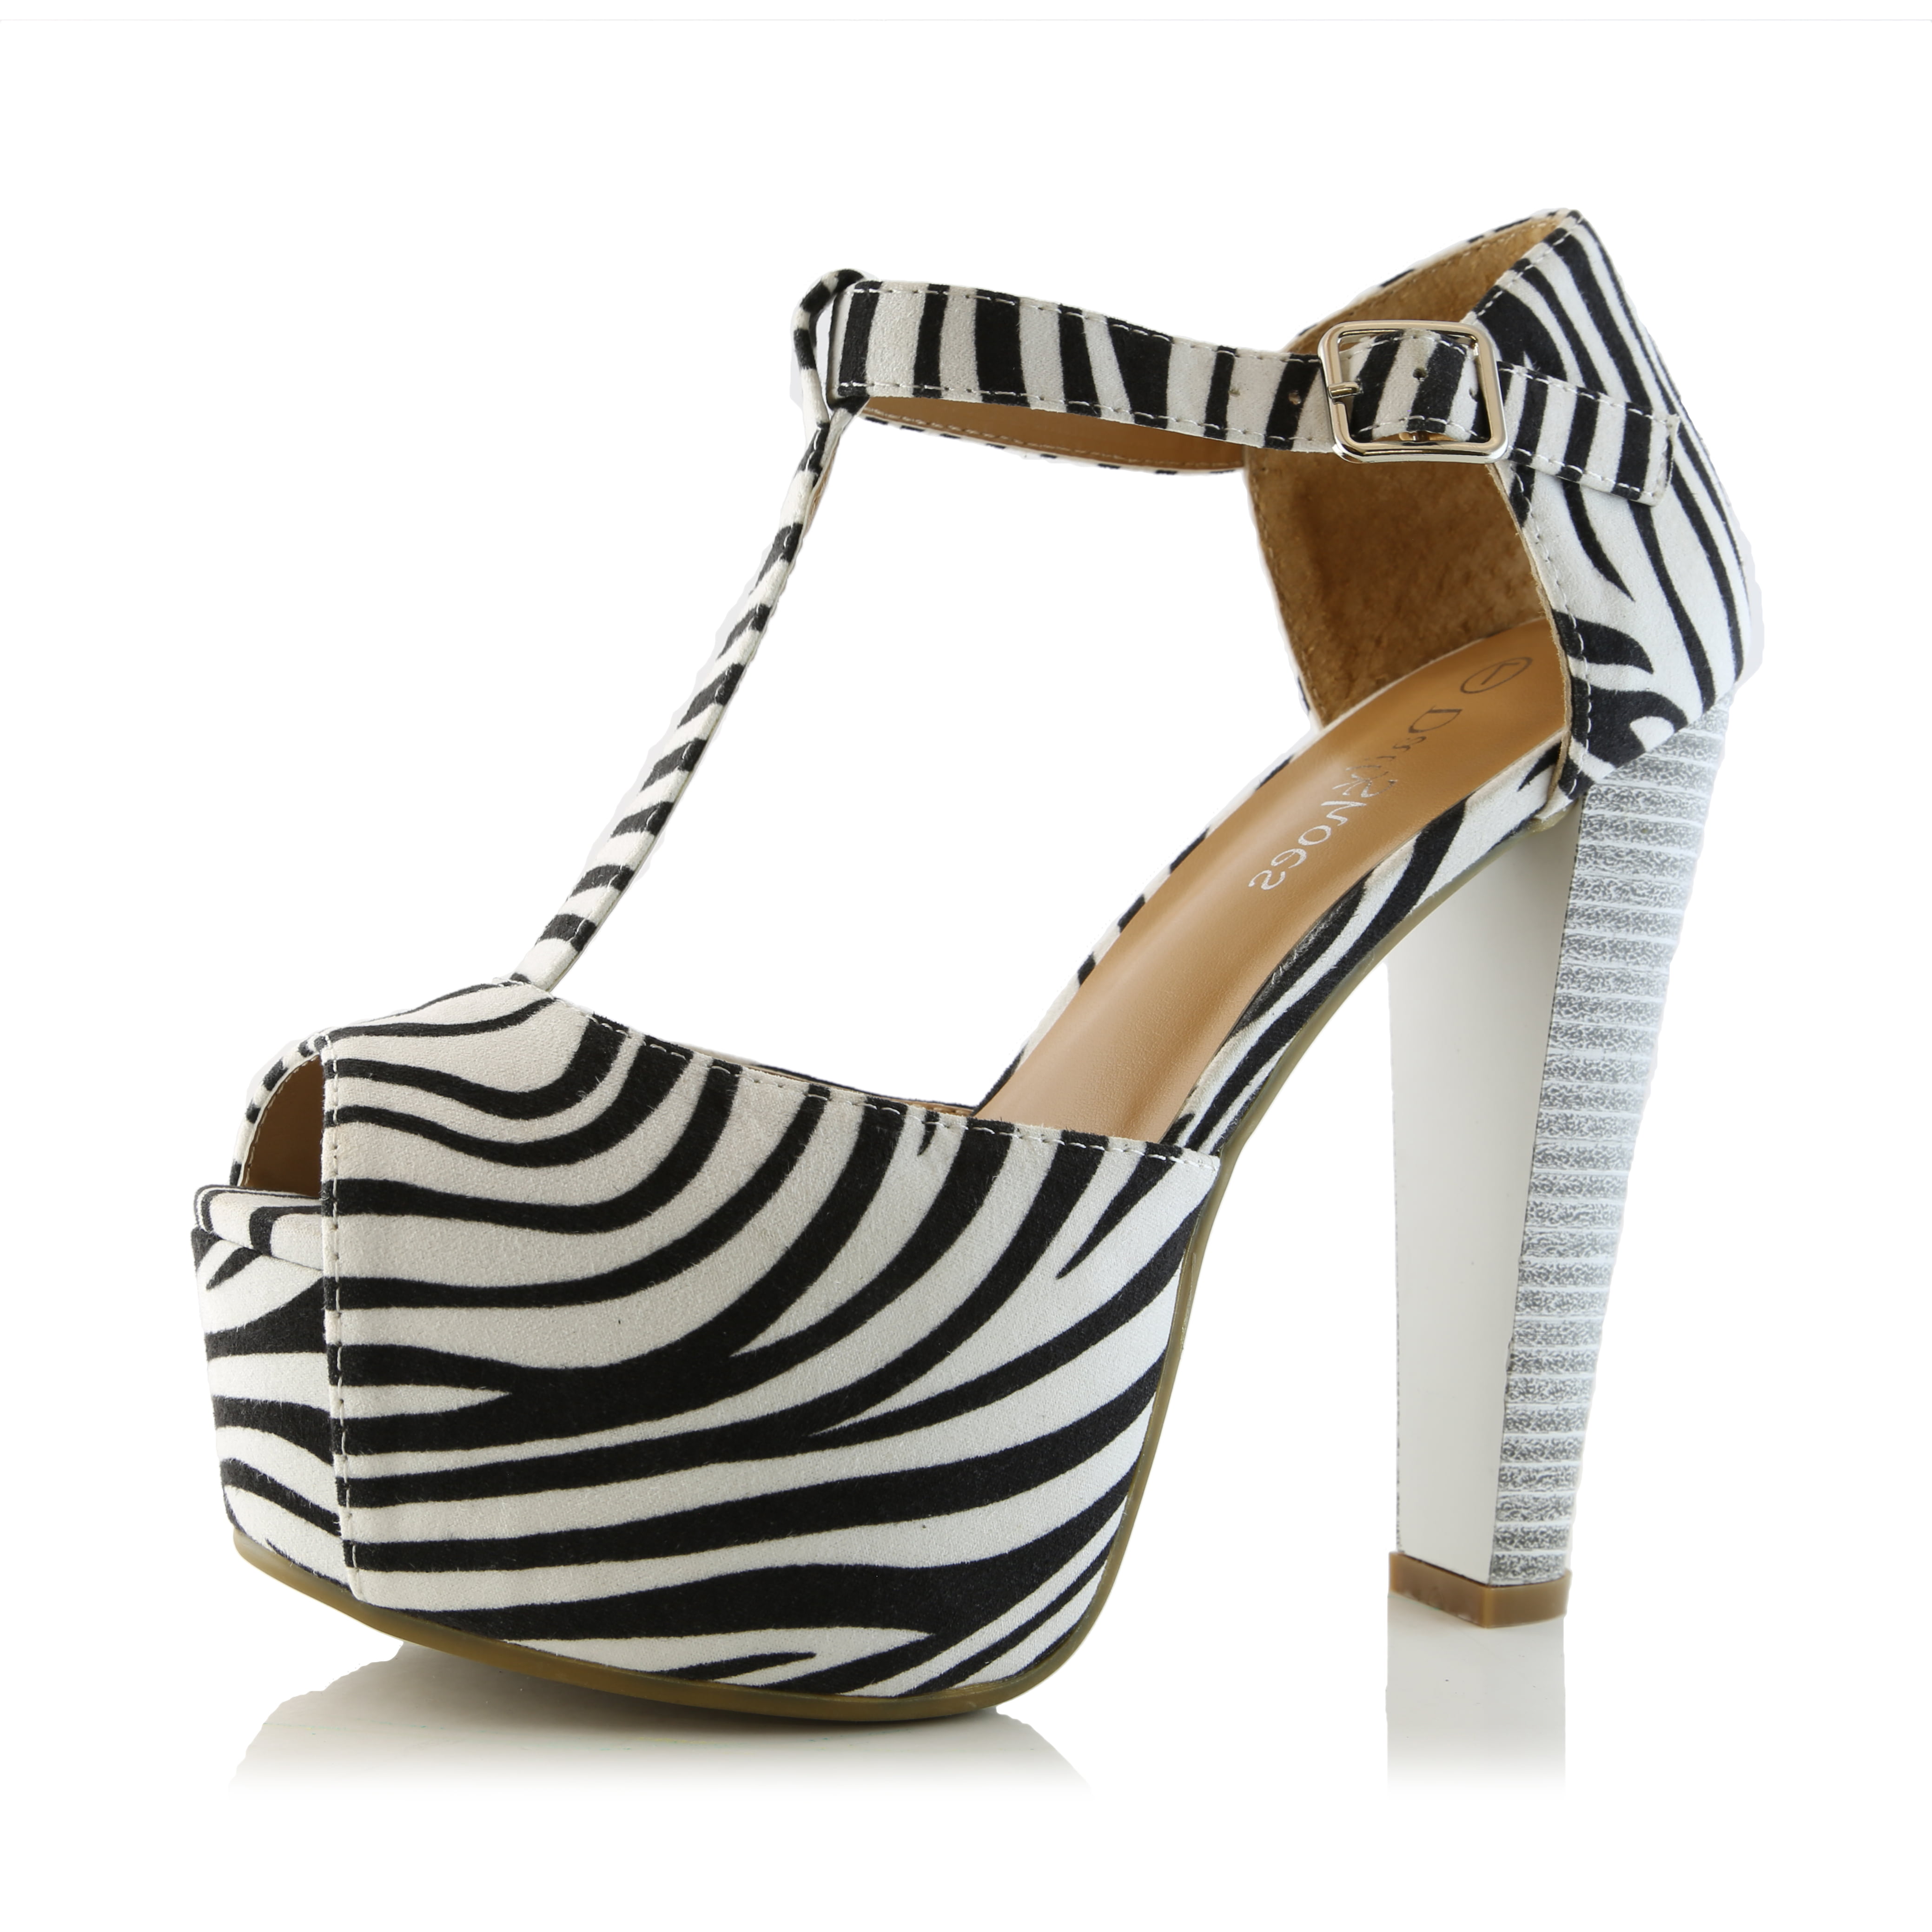 zebra high heels